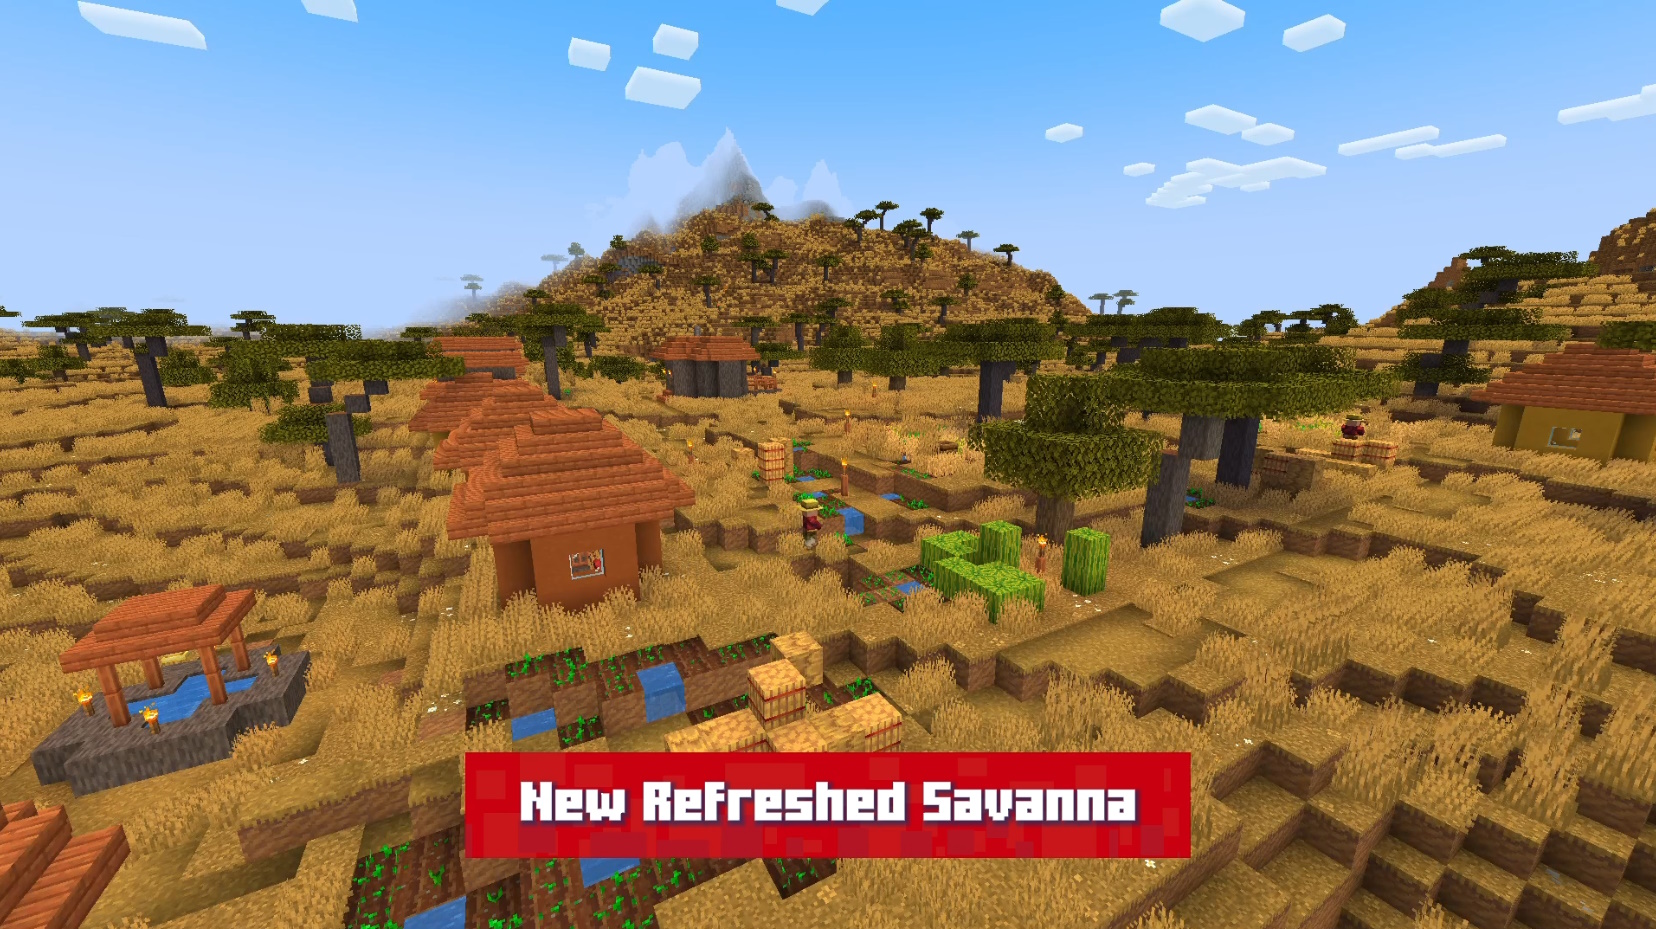 New Refreshed Savanna